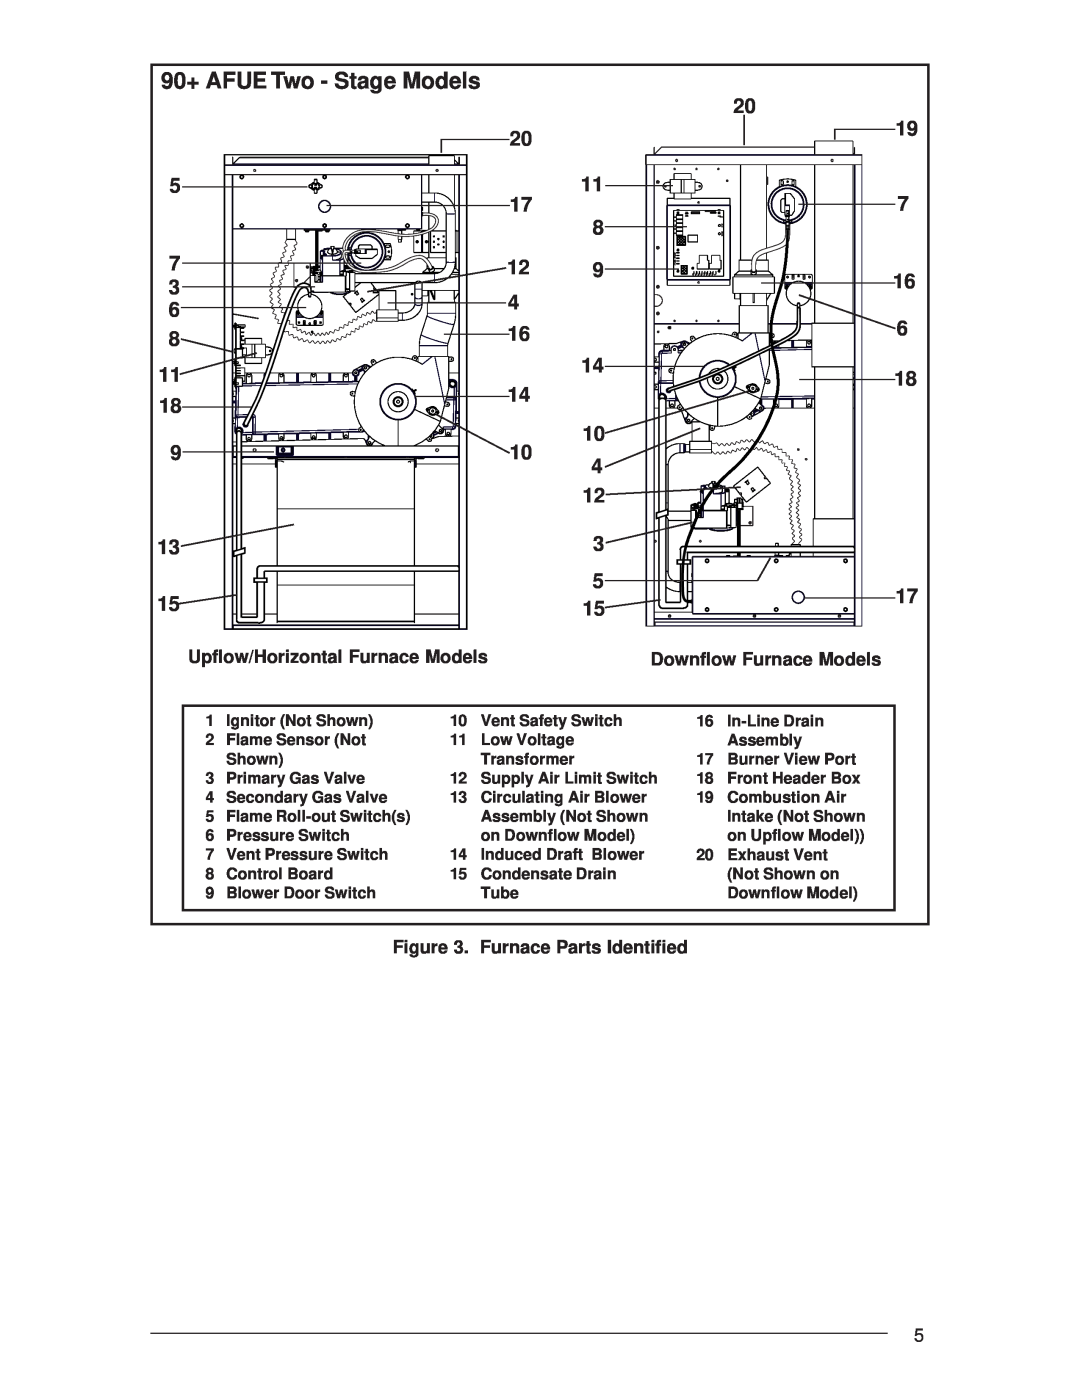 Nordyne Residential Gas Furnaces manual 90+ AFUE Two - Stage Models, 20 19 7, Upflow/Horizontal Furnace Models 